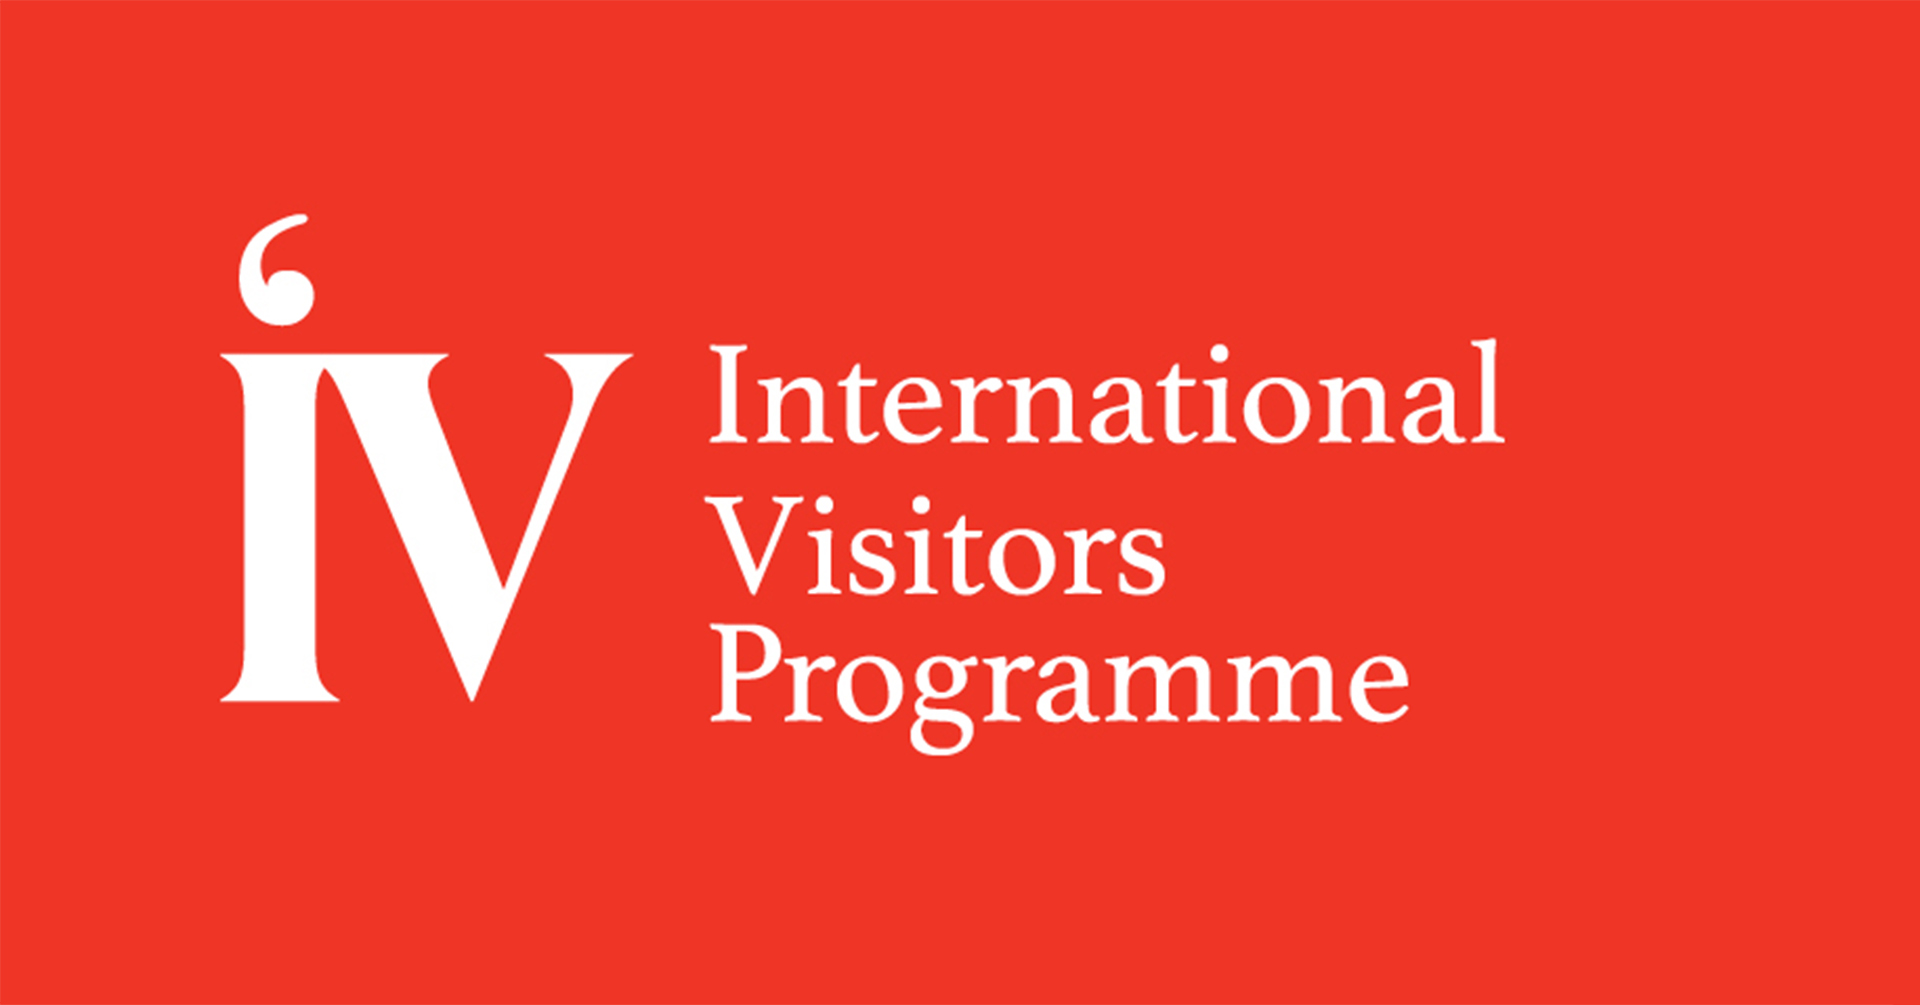 International Visitors Programme